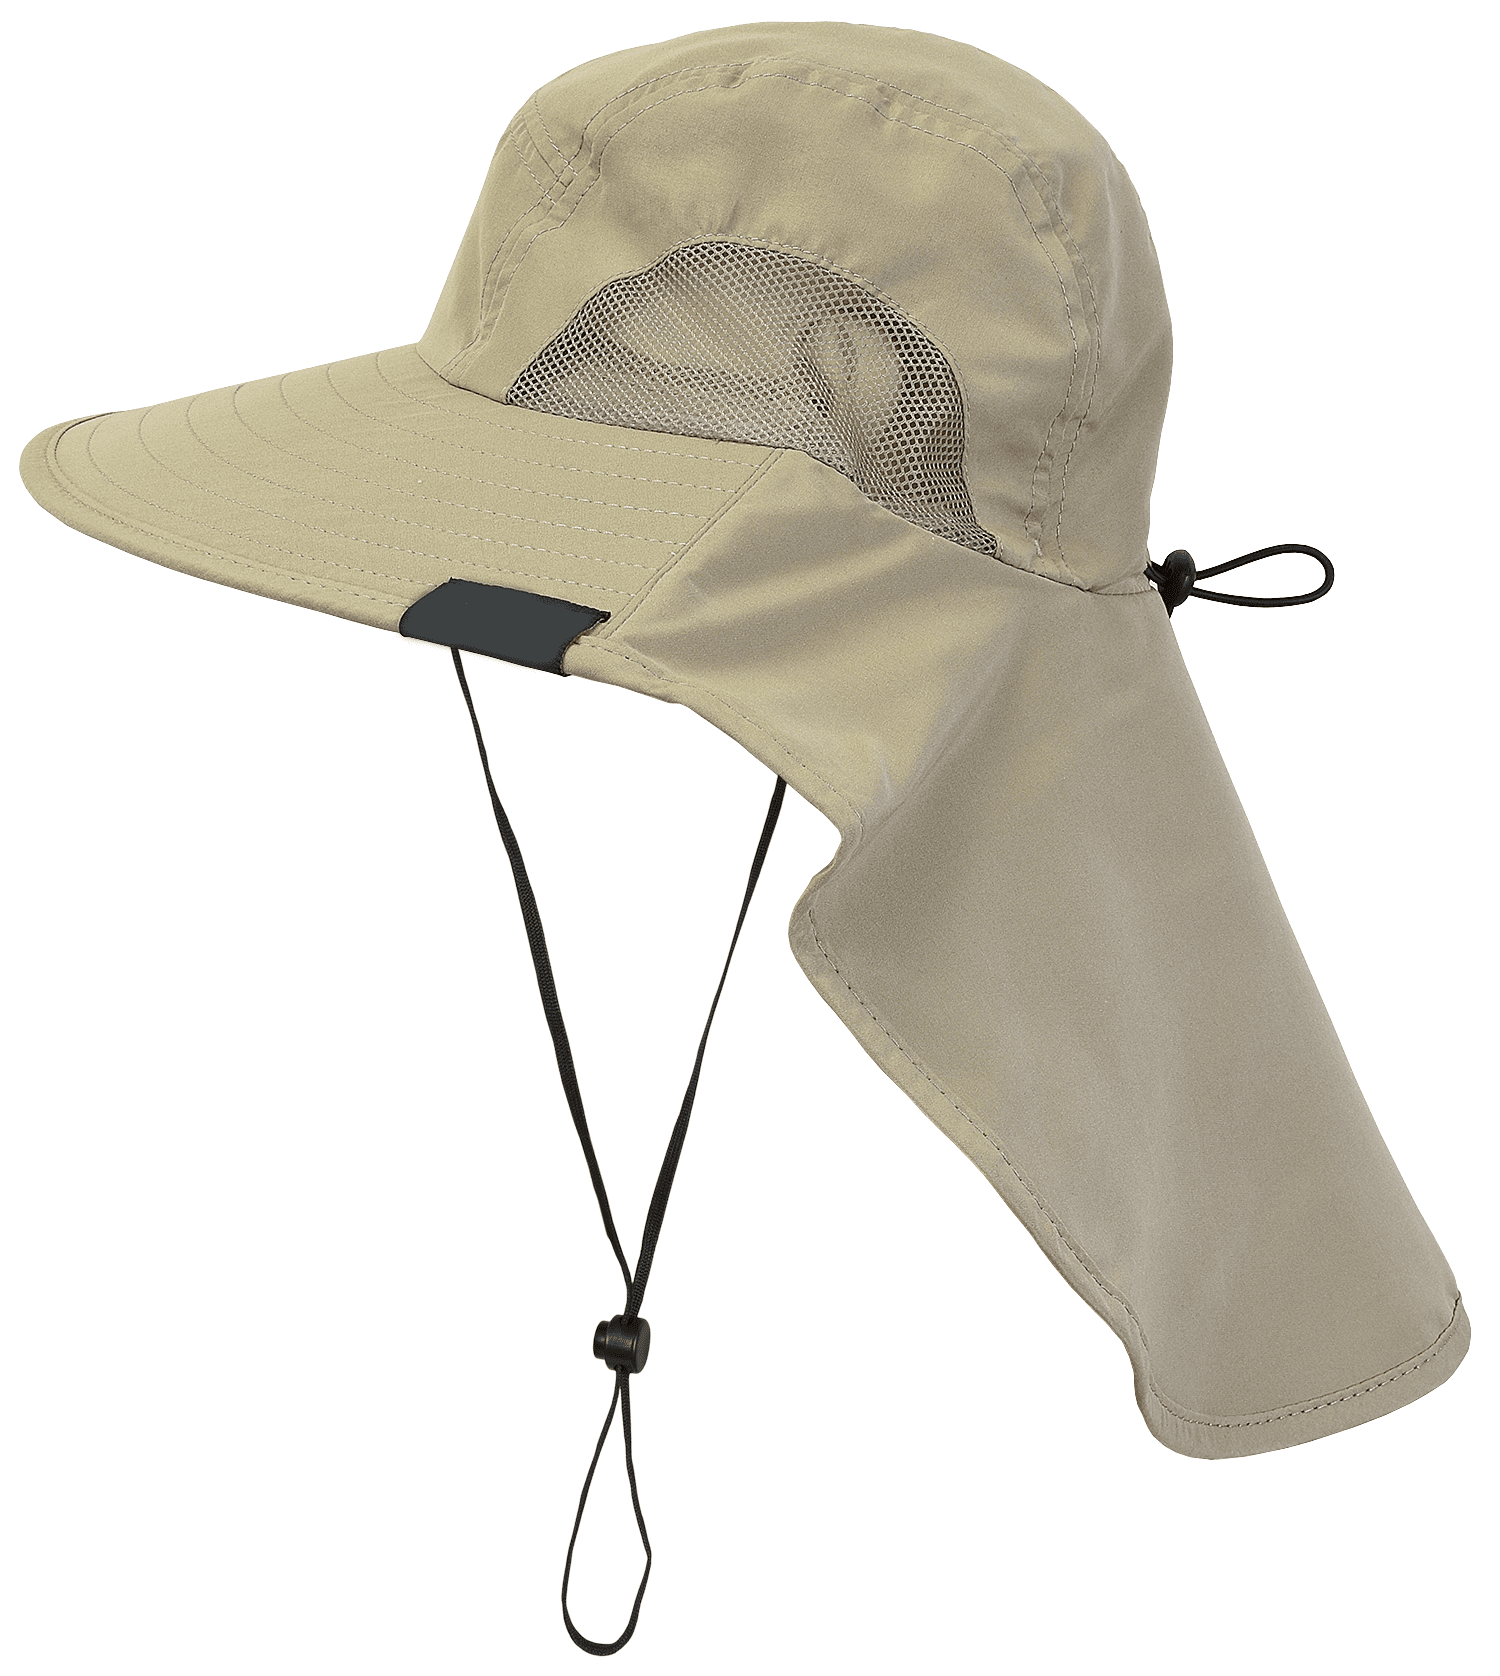 Unisex Safari Sun Flap Hat Fishing Hiking Cap w/Neck Cover Wide Brim Olive 